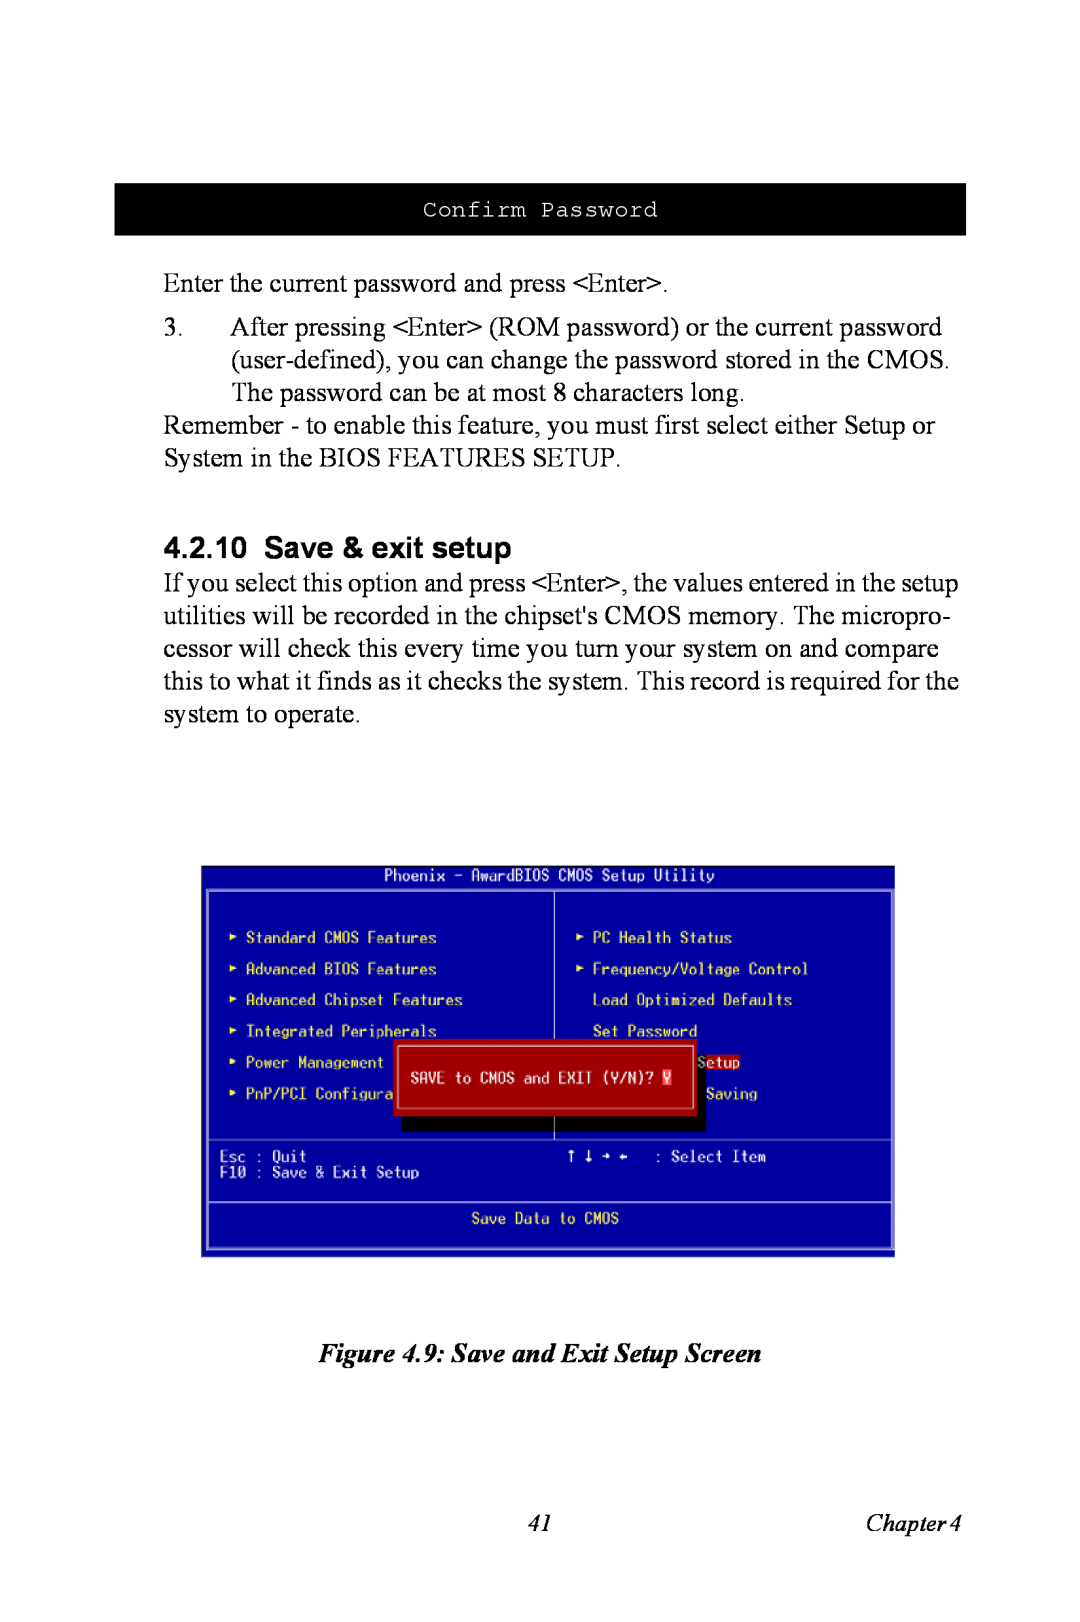 Intel PCM-3370 user manual Save & exit setup, 9 Save and Exit Setup Screen 